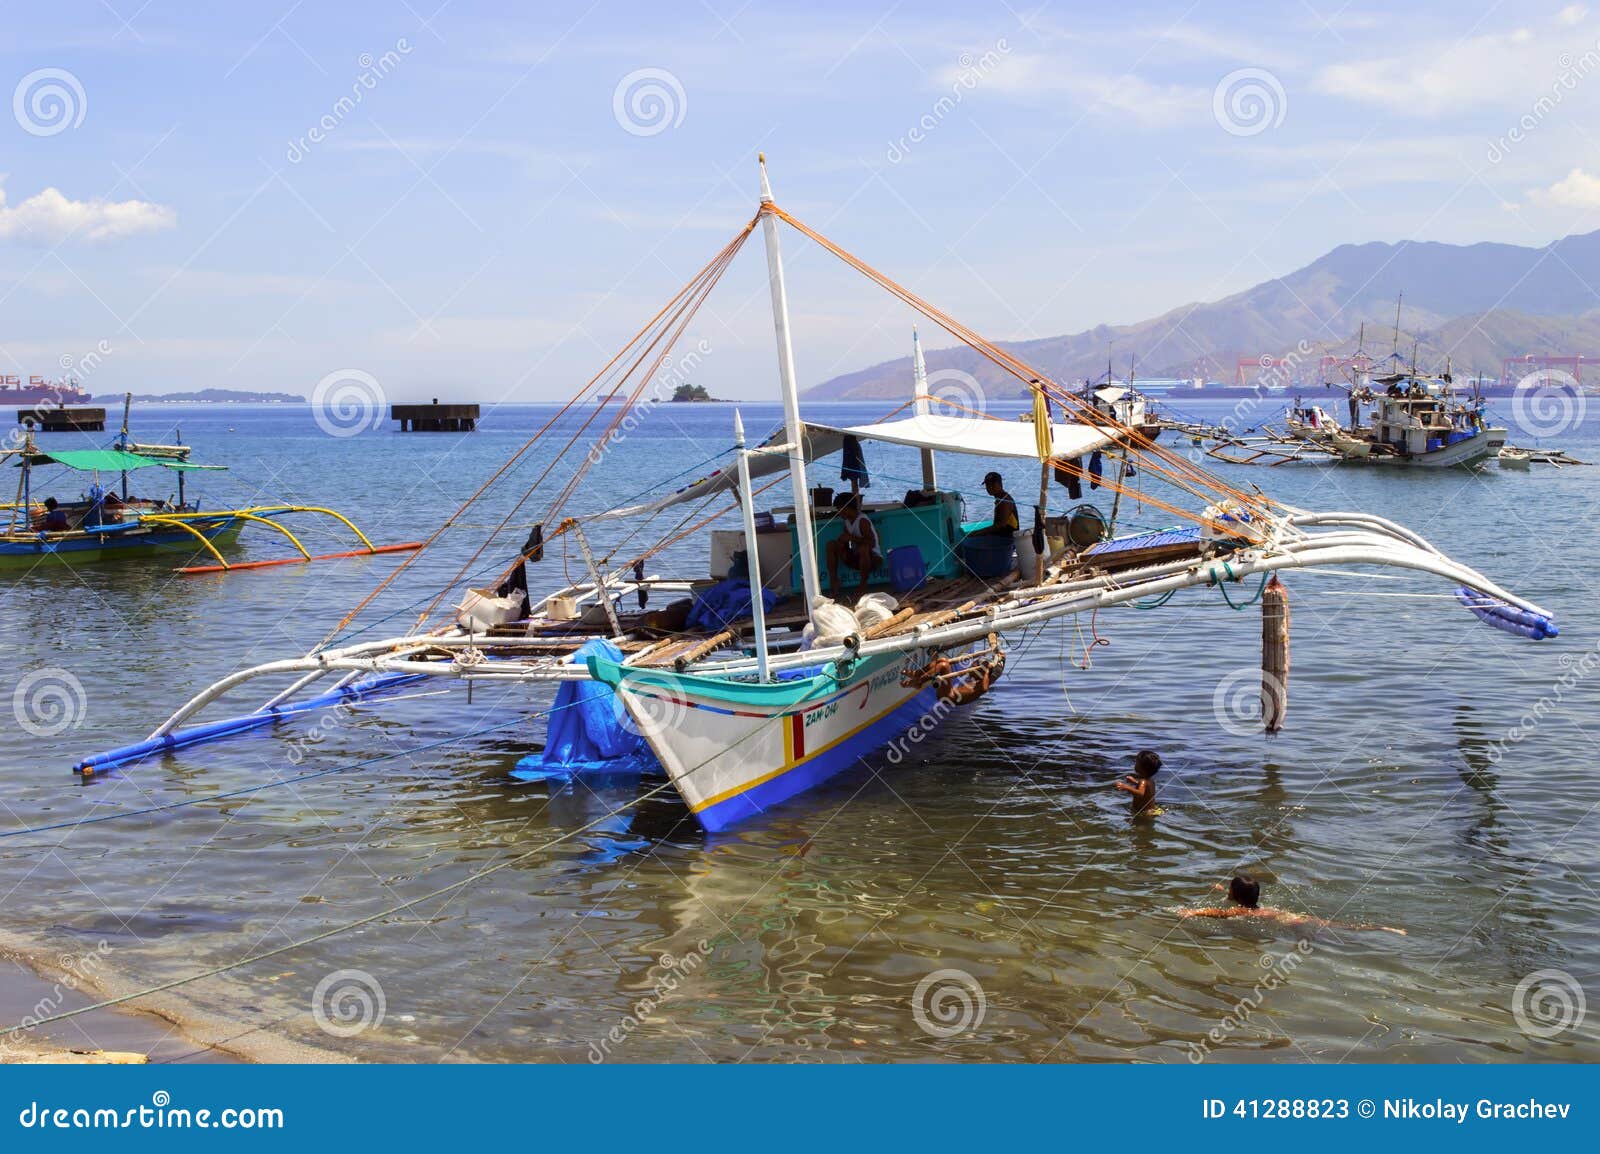 Philippines Fishing Boat and Children. Philippines, Olongapo City 06 